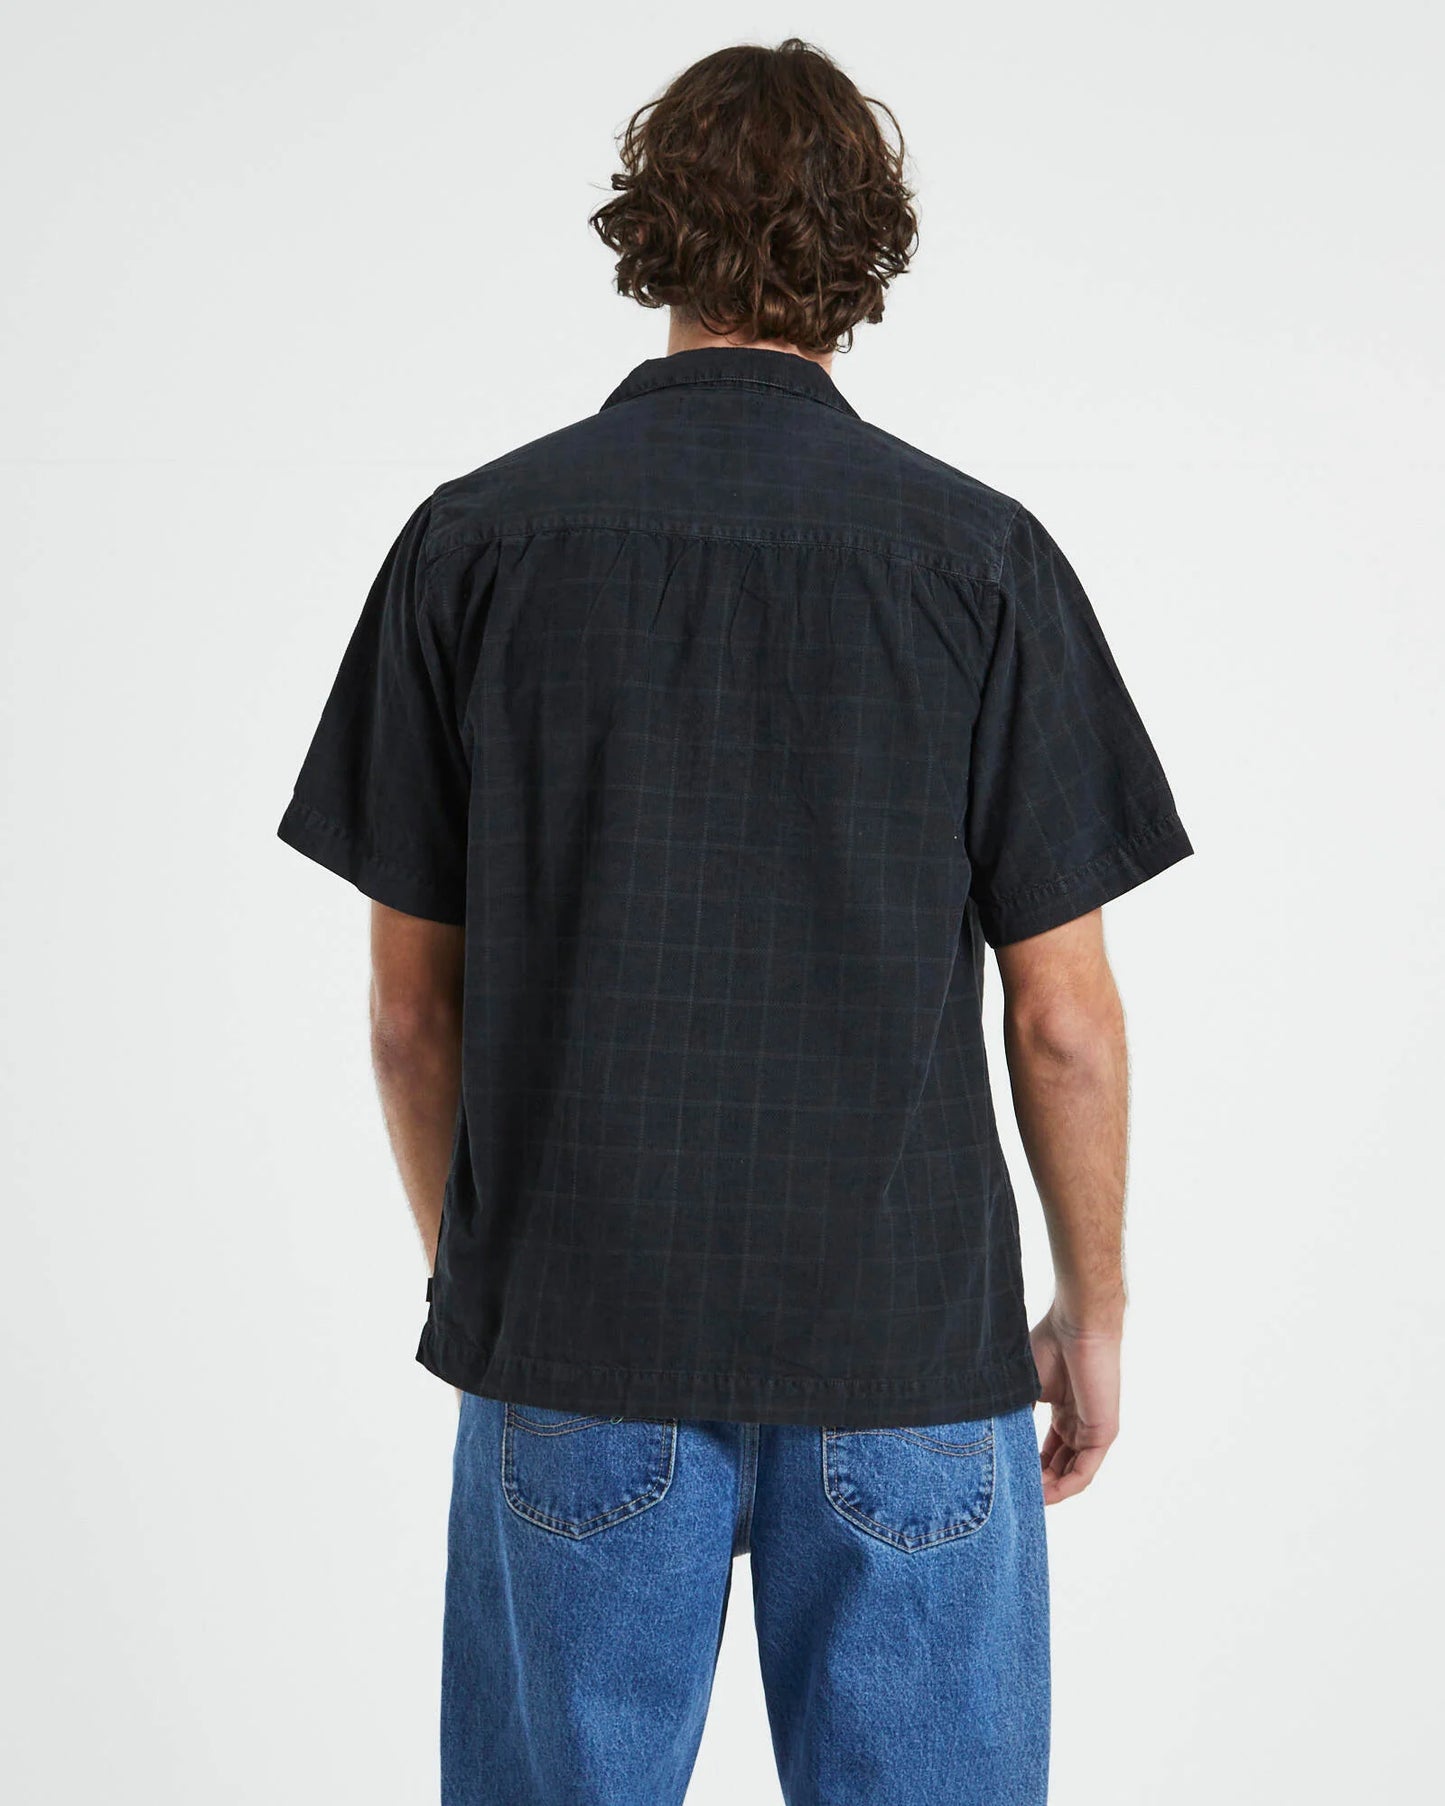 ROLLAS // Tile Cord Bowler Shirt SULPHUR BLACK